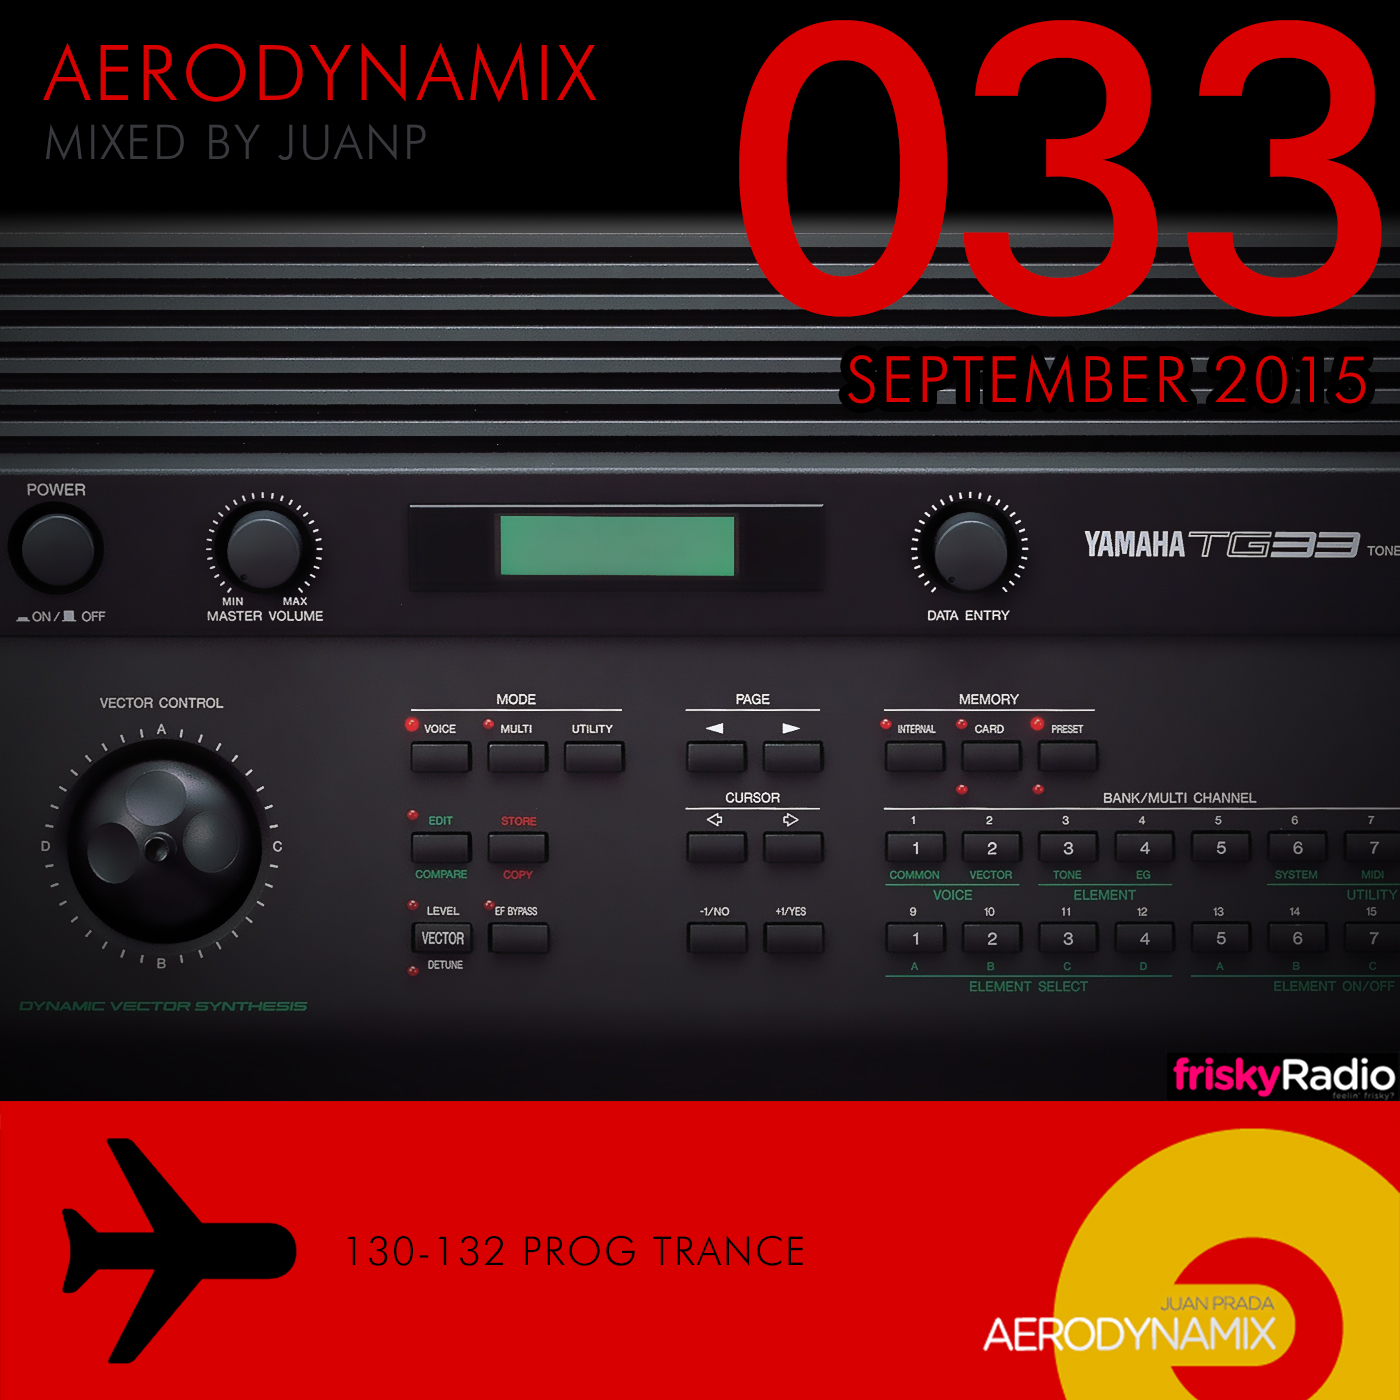 Aerodynamix 033 @ Frisky Radio September 2015 mixed by JuanP